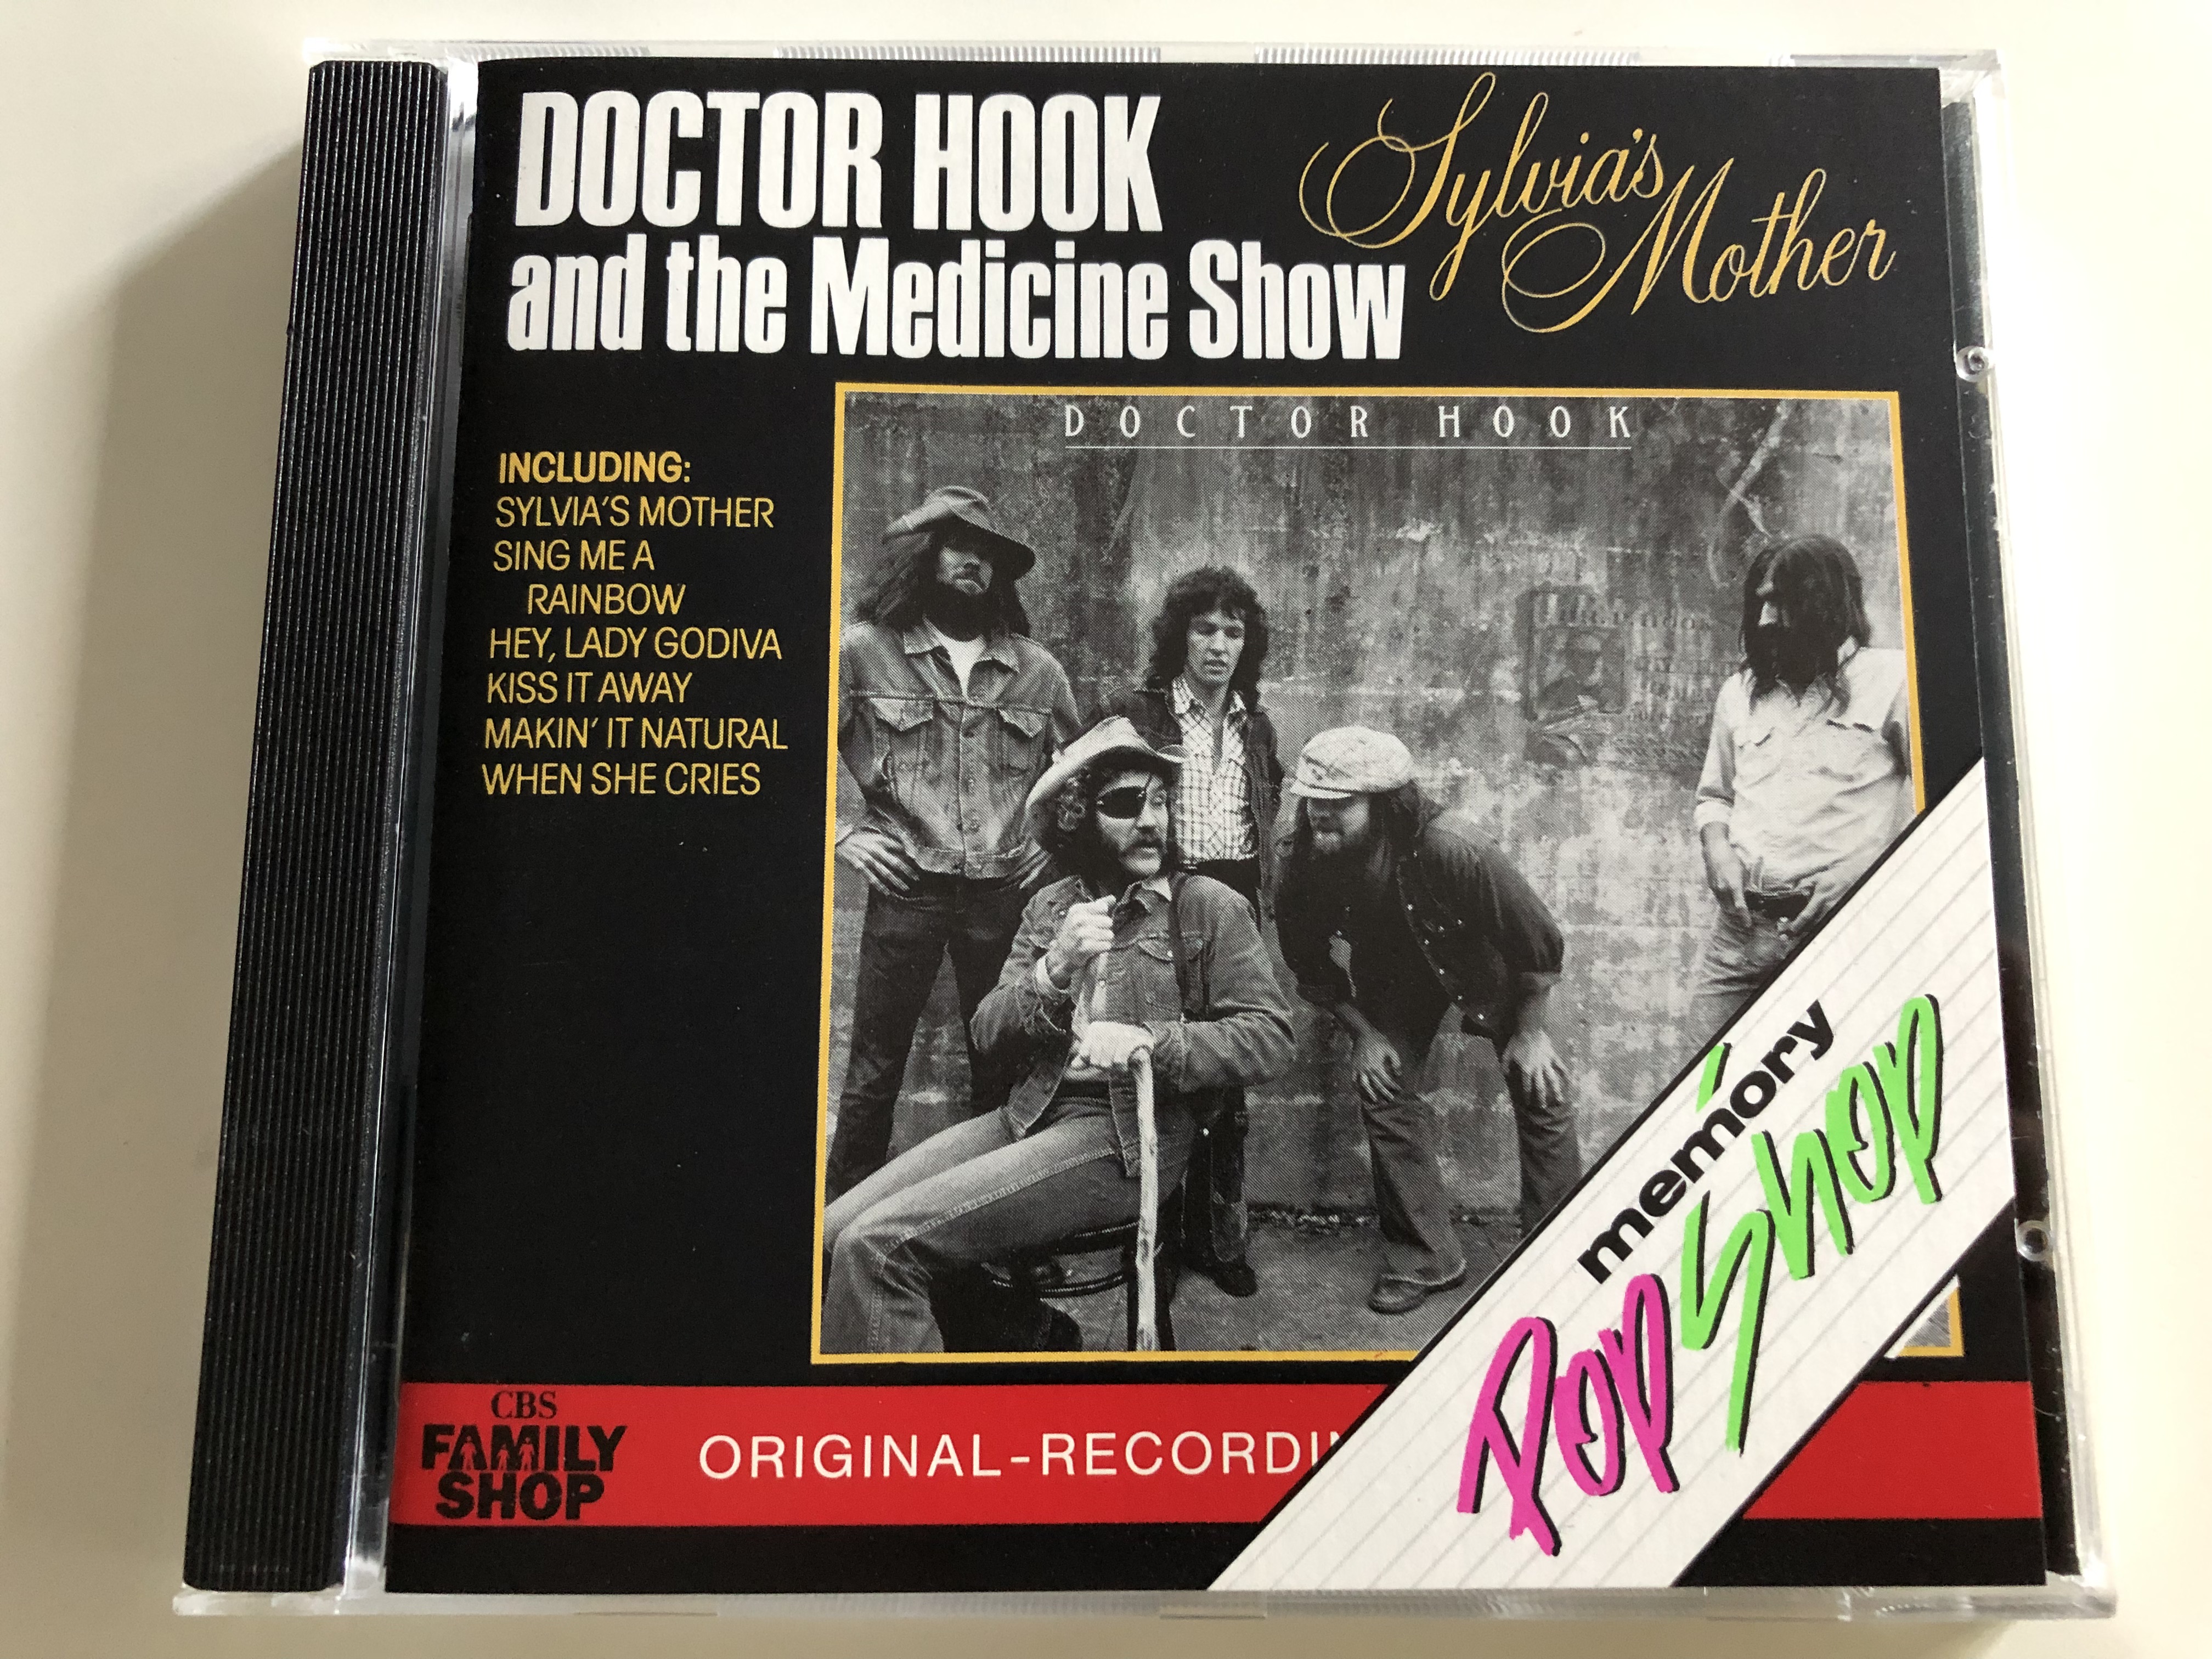 doctor-hook-and-the-medicine-show-sylvia-s-mother-sing-me-a-rainbow-hey-lady-godiva-original-recordings-audio-cd-1972-cbs-4631602-cb-651-1-.jpg